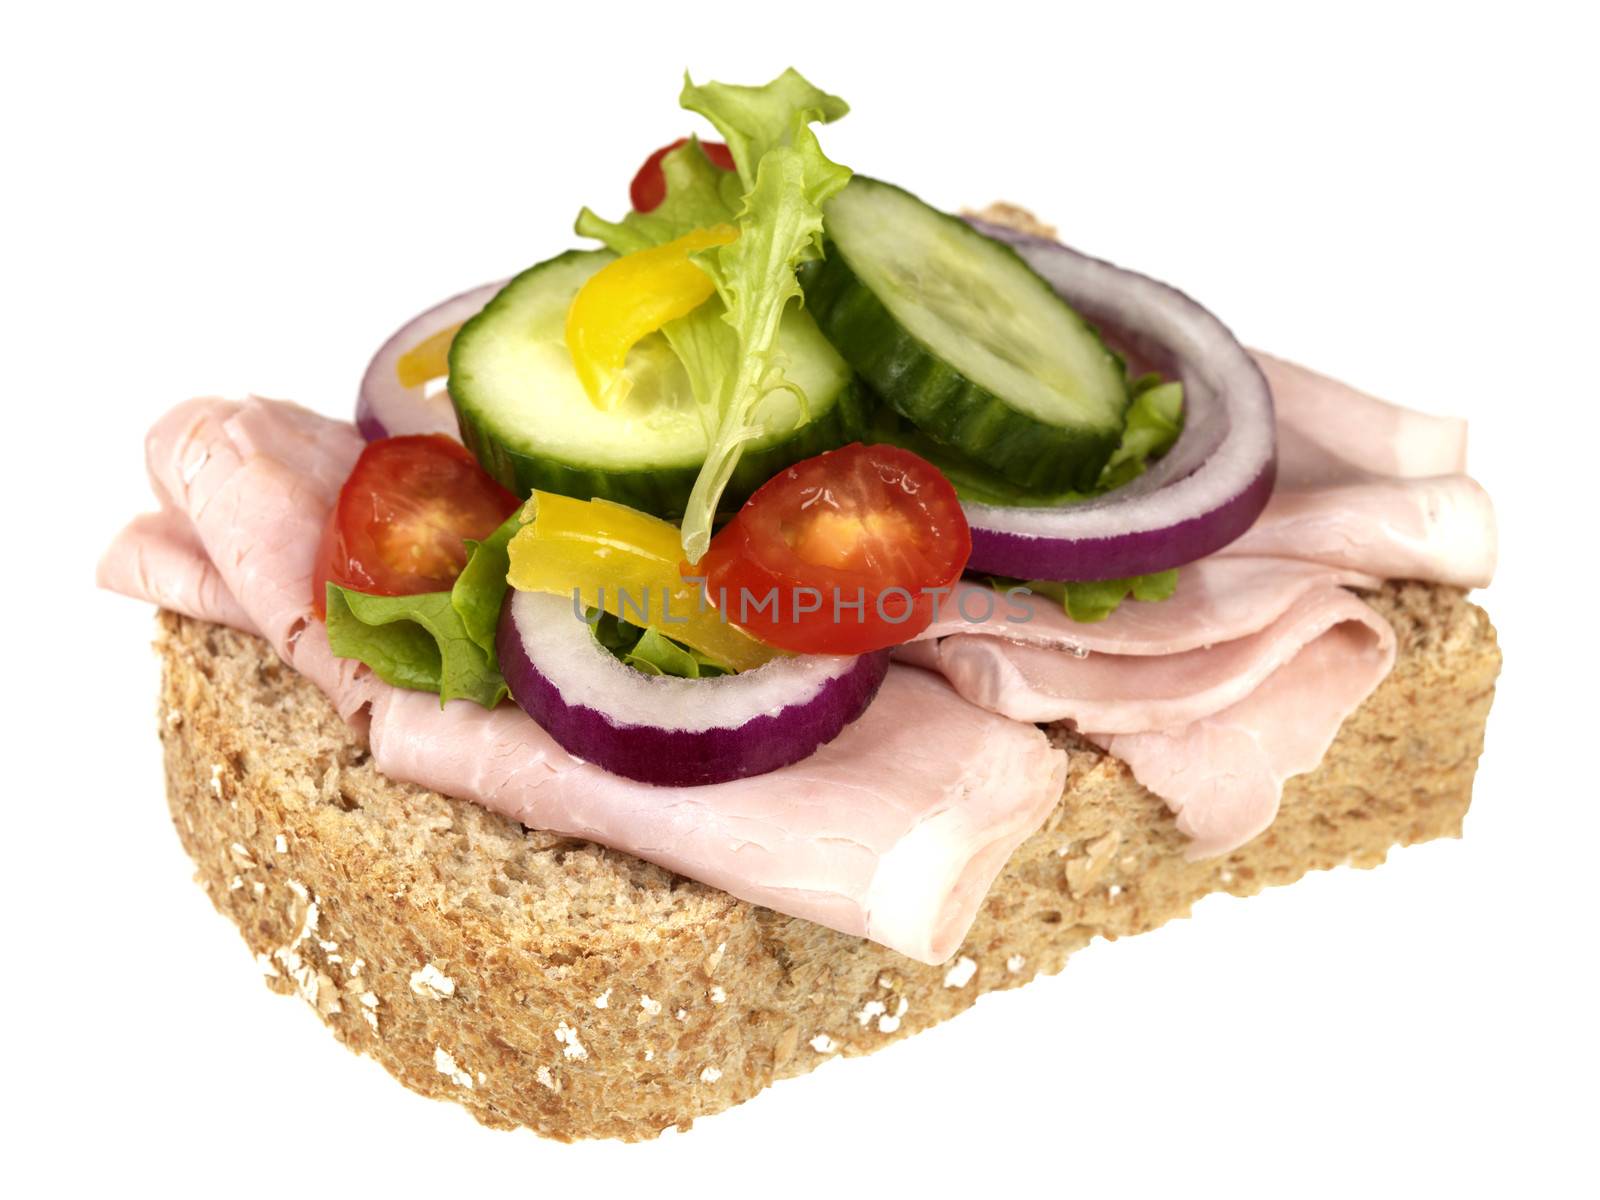 Ham and Salad Sandwich